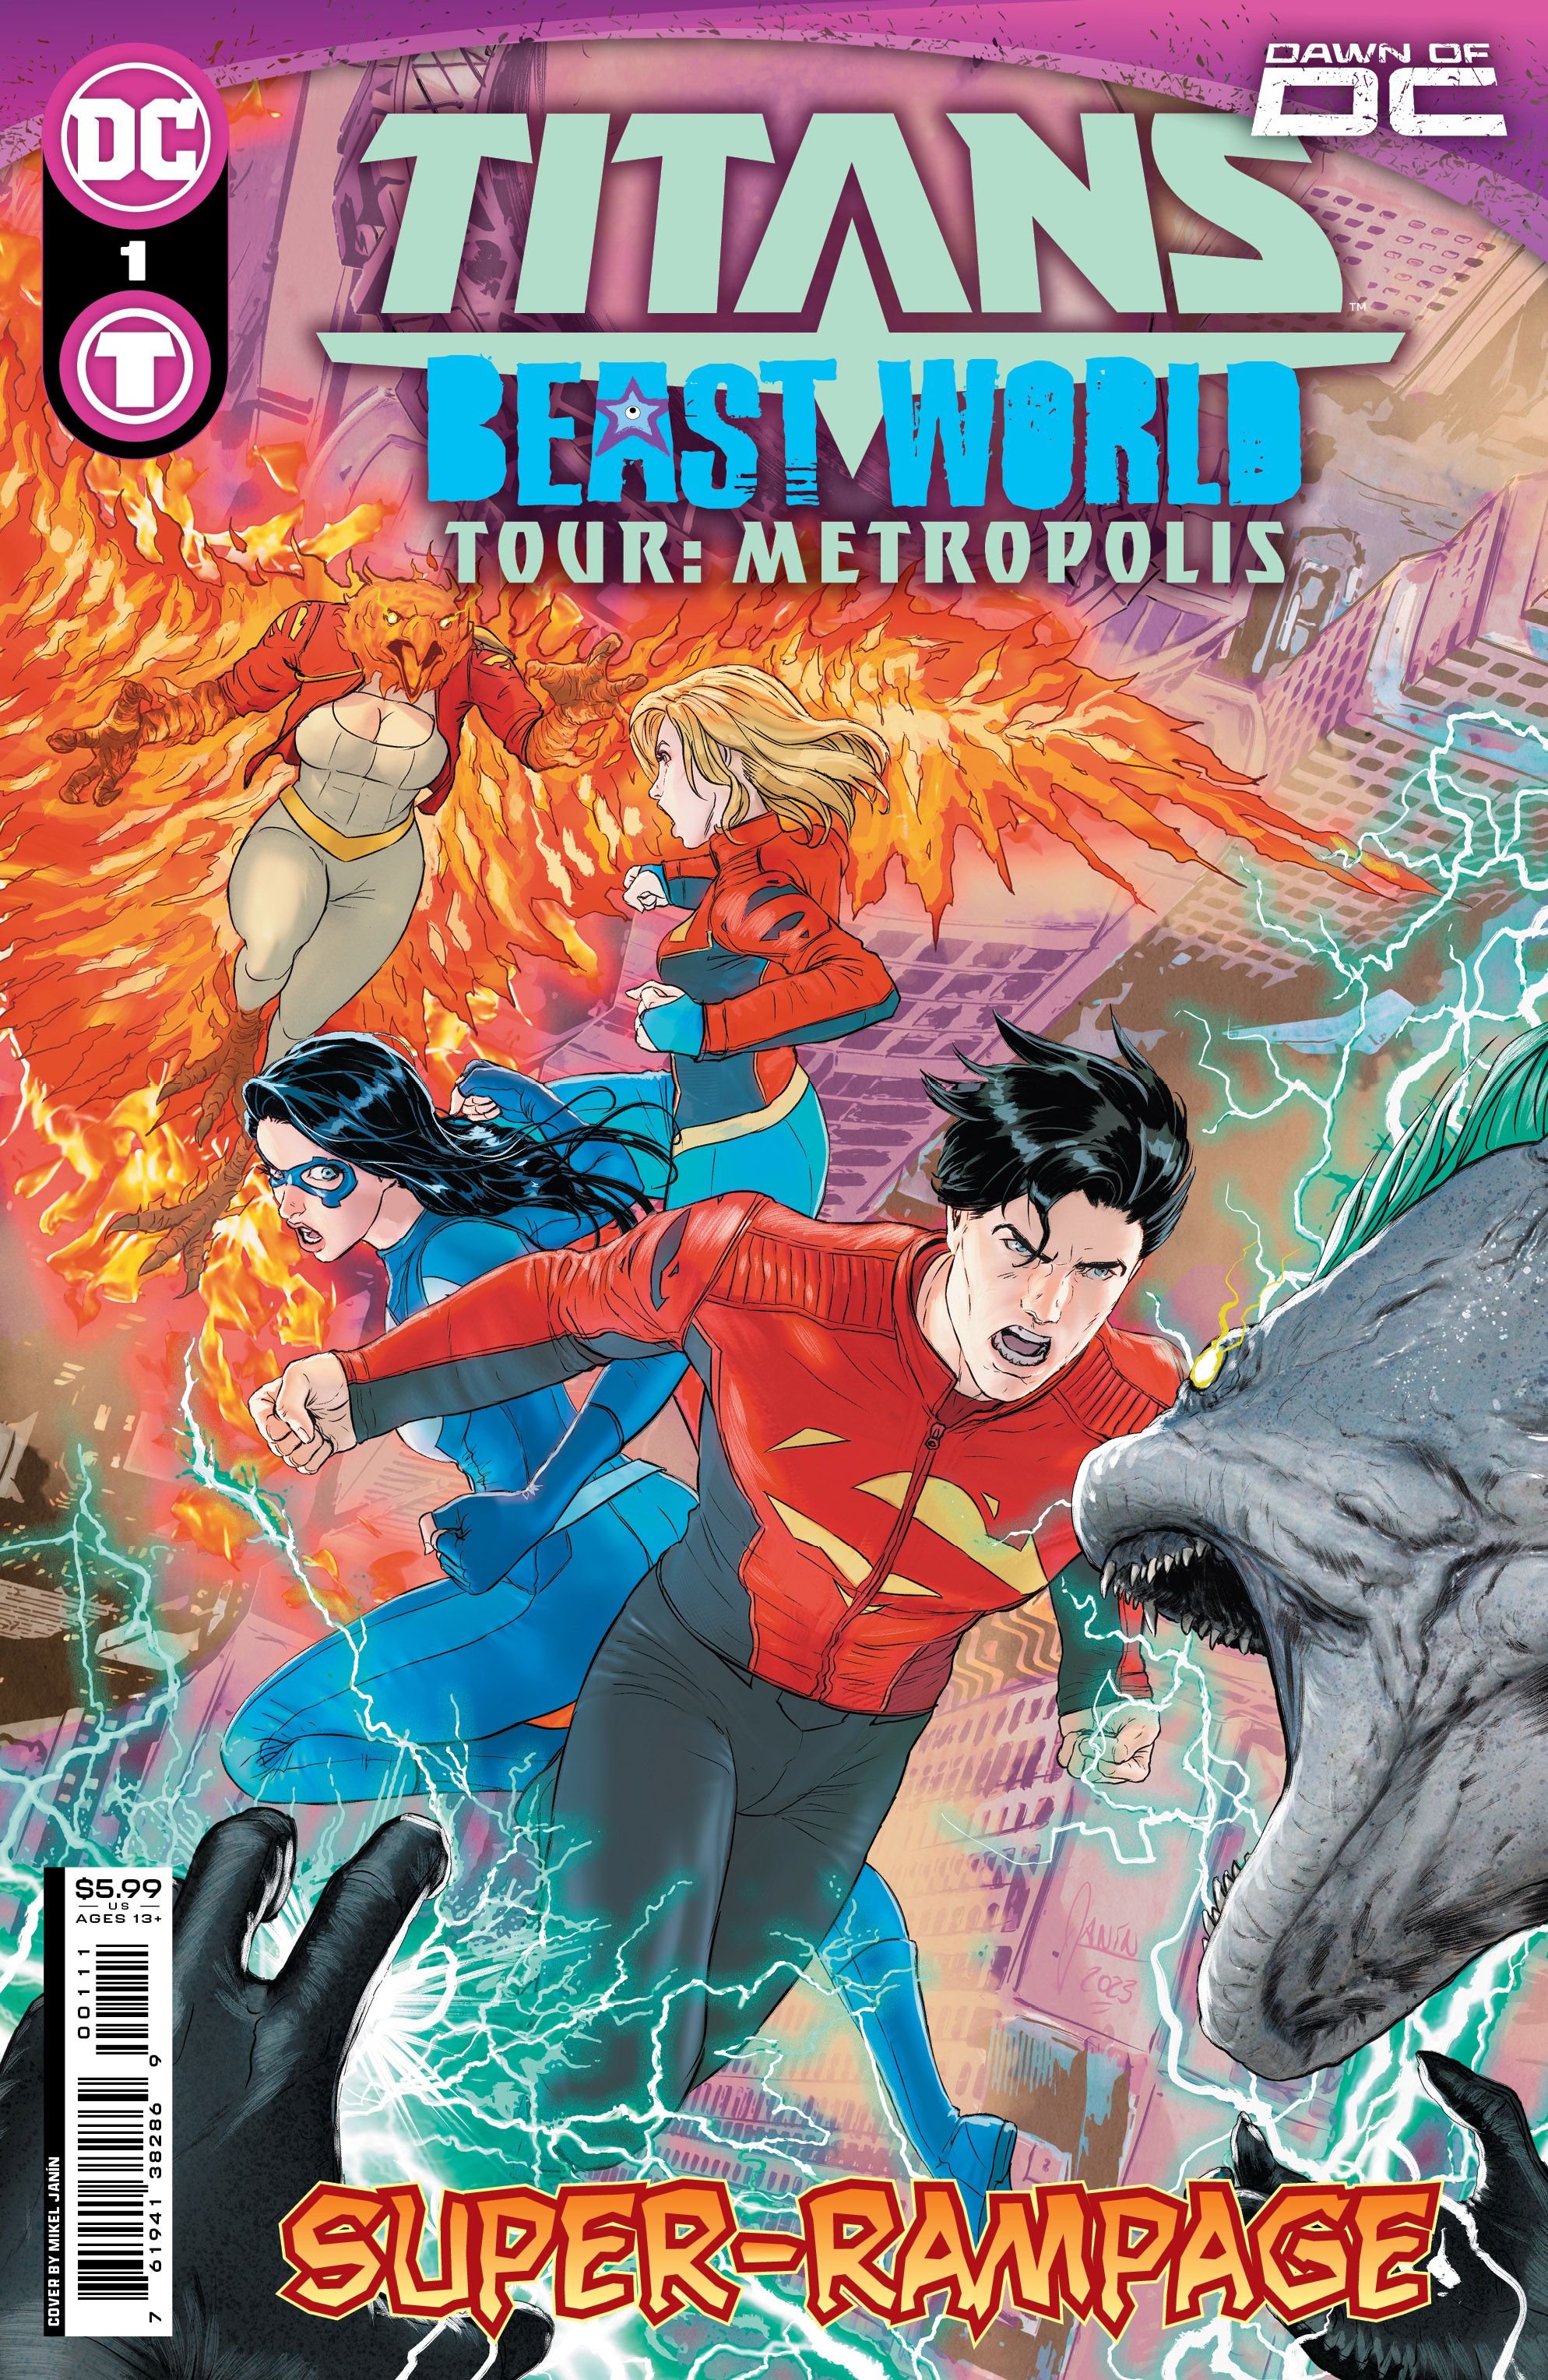 Titans: Beast World Tour - Metropolis Comic